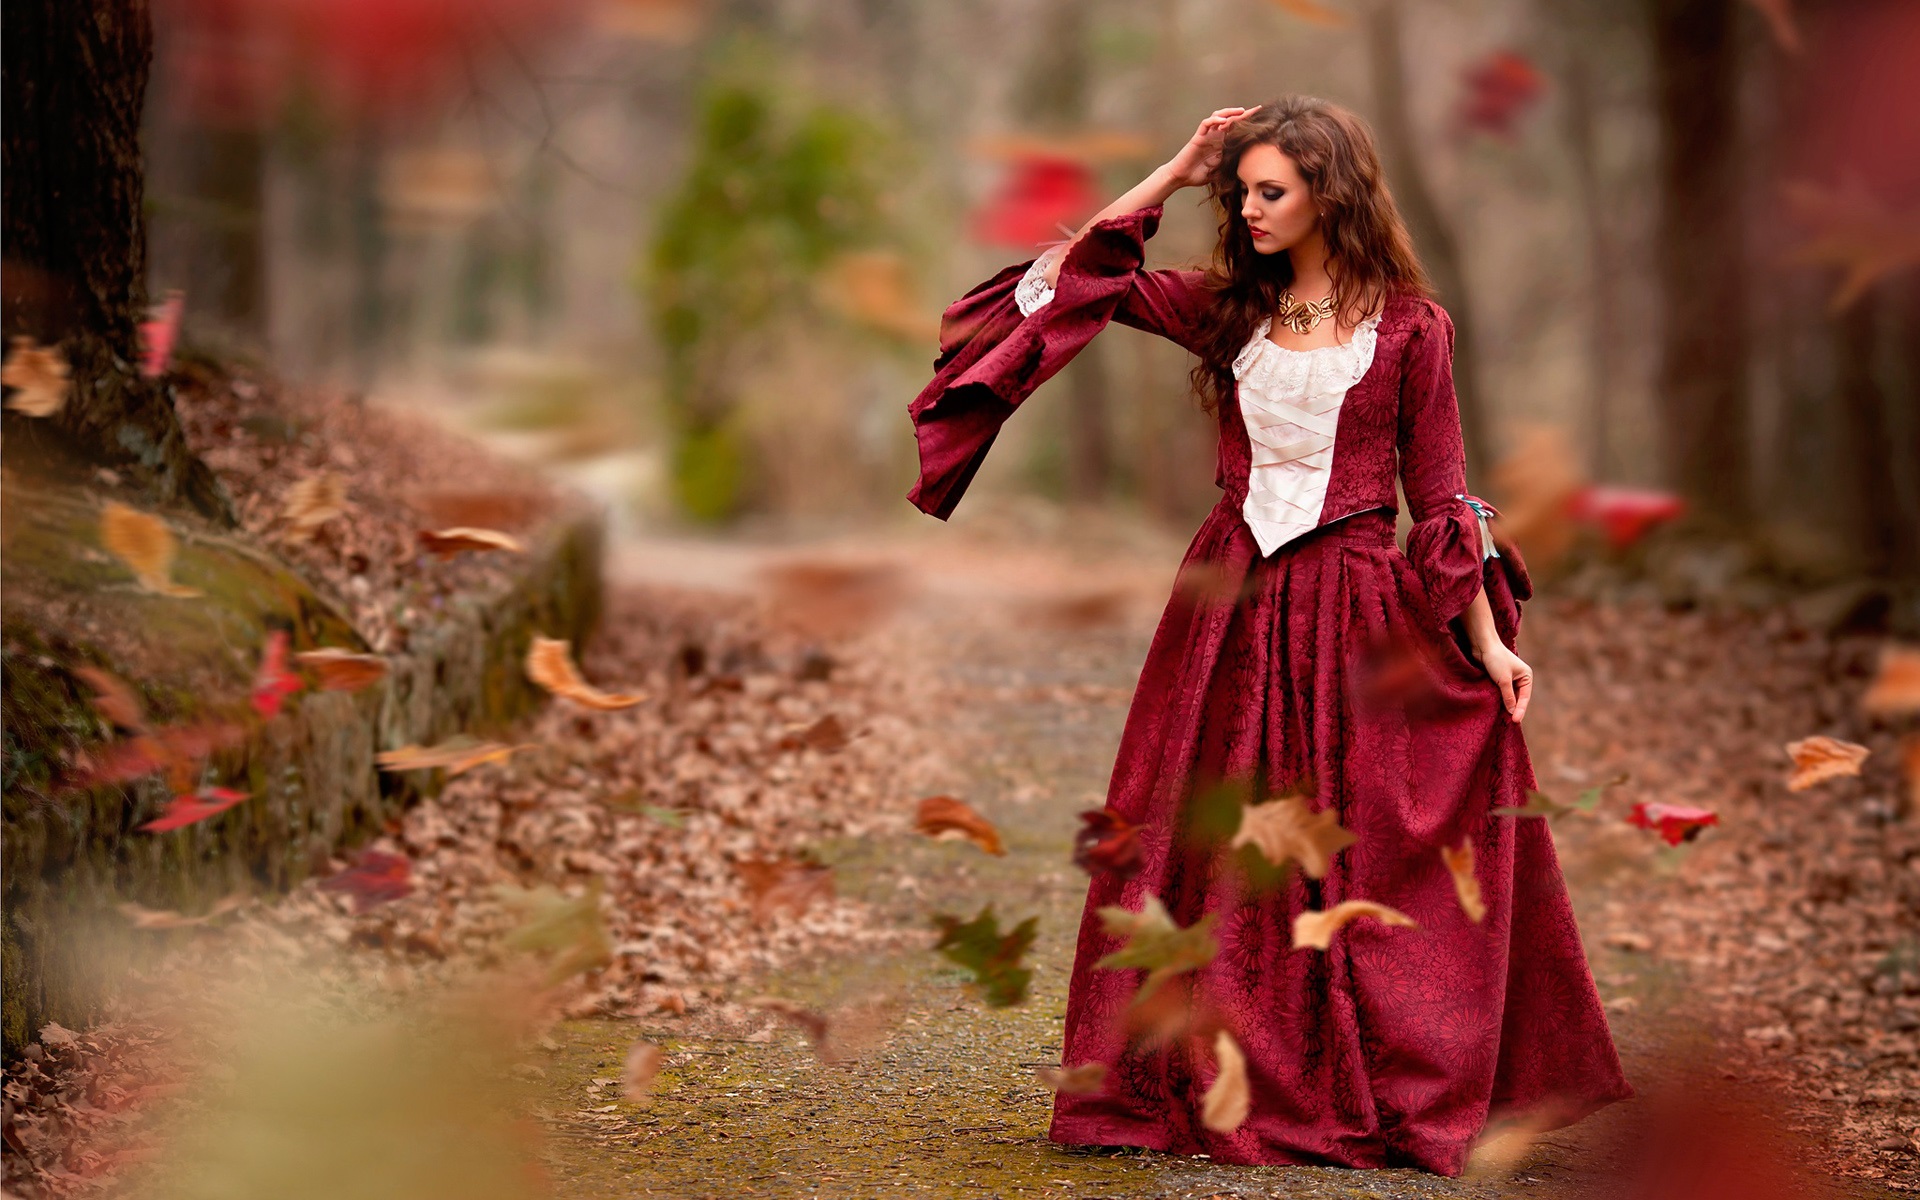 Autumn-leaves-red-dress-girl-wind_1920x1200.jpg